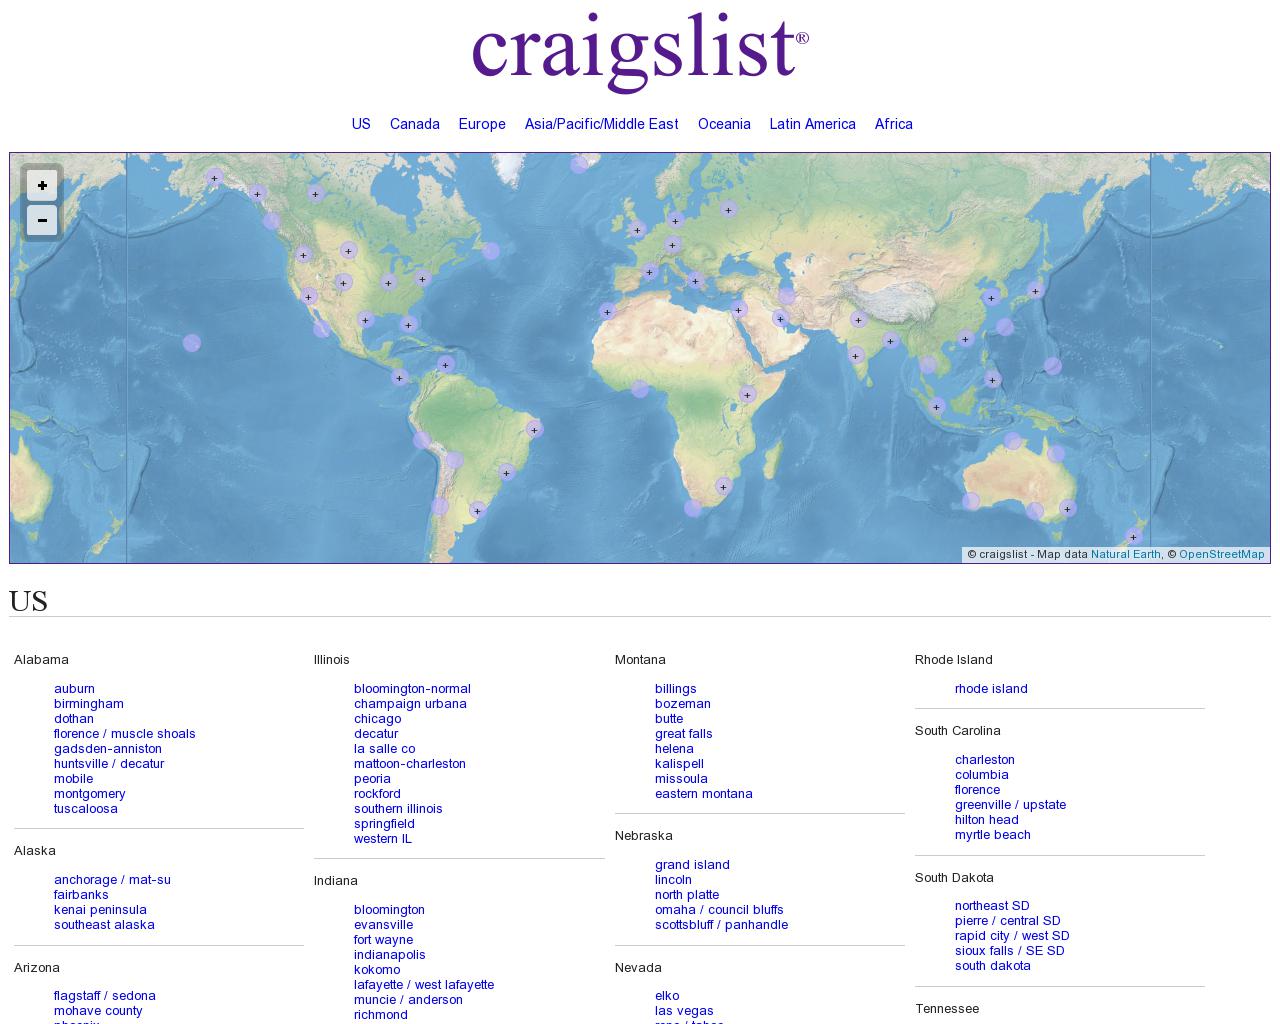 craigslist.com